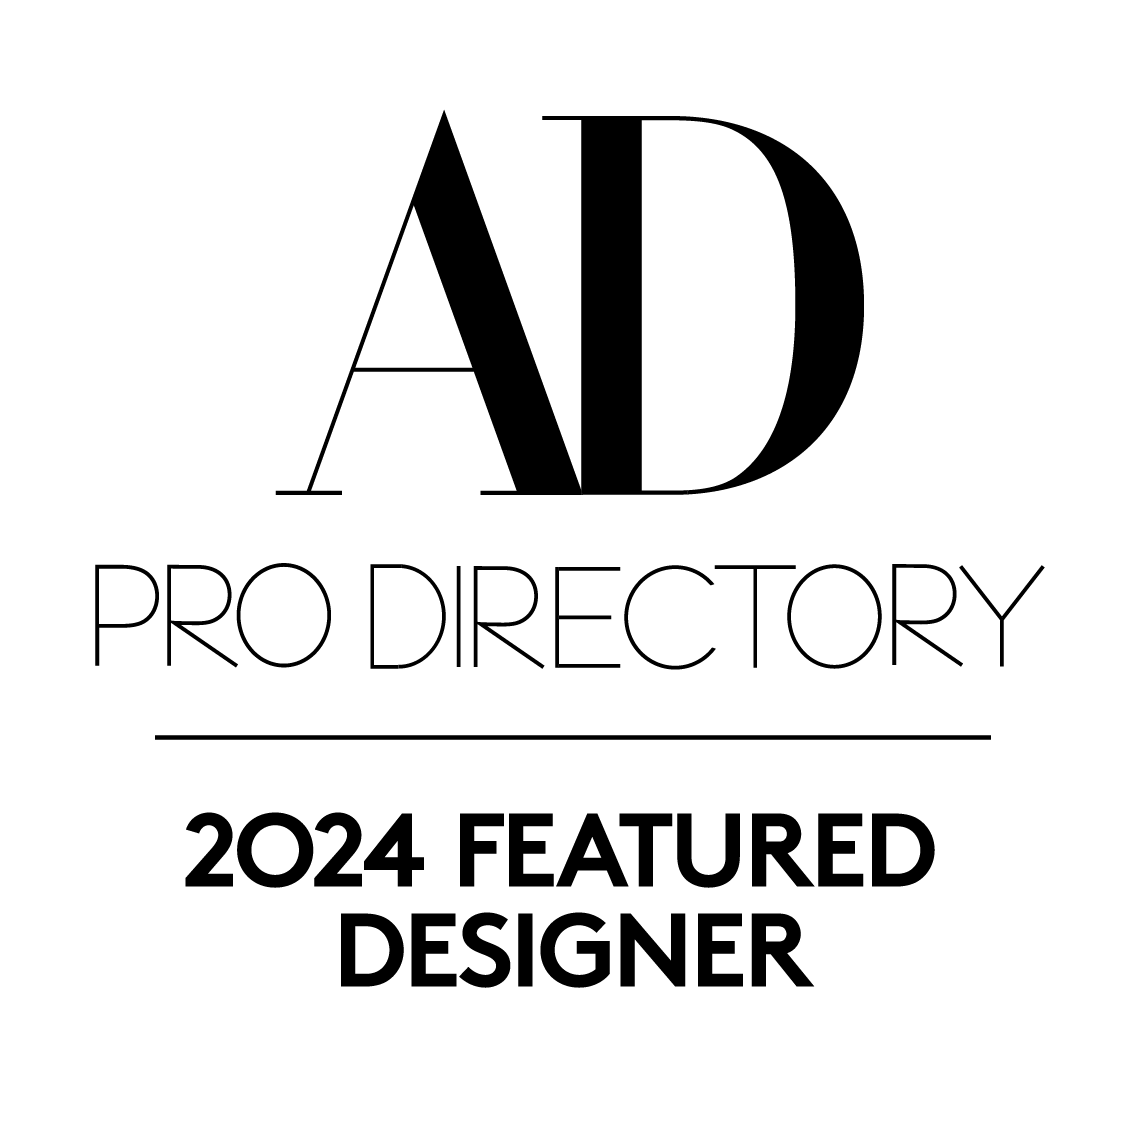 AD Pro Directory 2024 Featured Designer